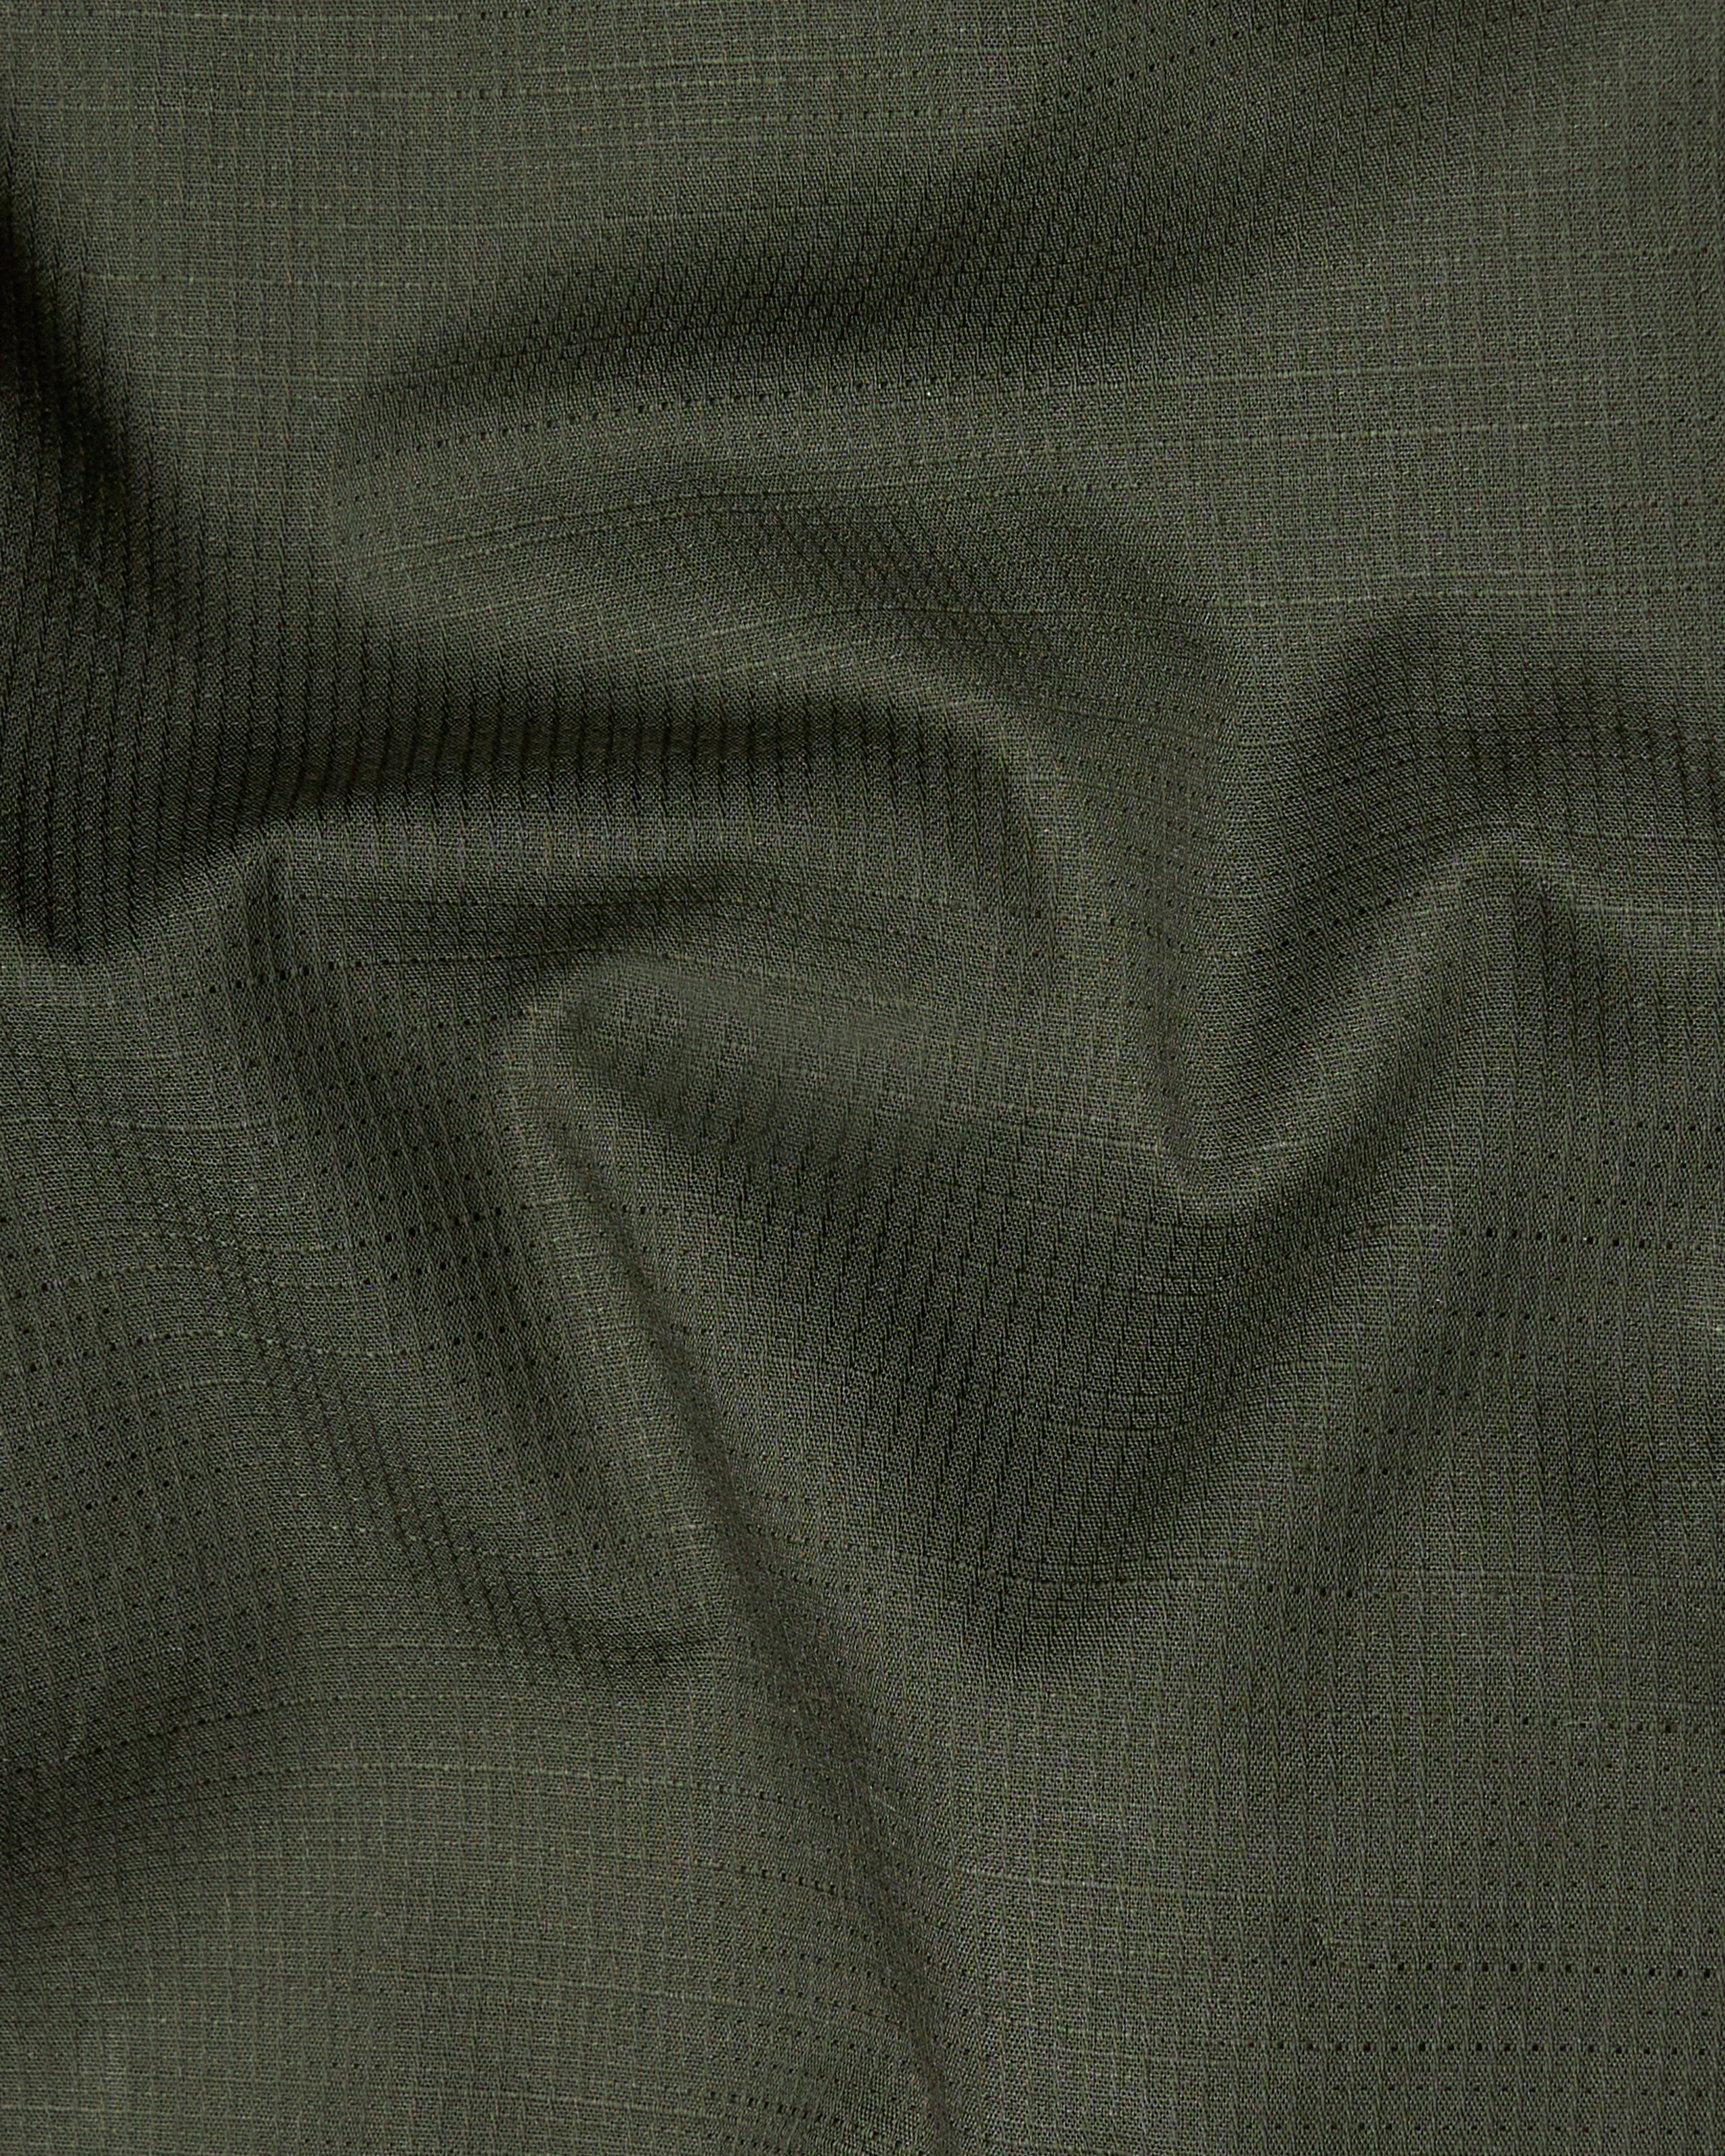 Iridium Green With White Double Collar  Royal Oxford Designer Shirt 9786-P442-38, 9786-P442-H-38, 9786-P442-39, 9786-P442-H-39, 9786-P442-40, 9786-P442-H-40, 9786-P442-42, 9786-P442-H-42, 9786-P442-44, 9786-P442-H-44, 9786-P442-46, 9786-P442-H-46, 9786-P442-48, 9786-P442-H-48, 9786-P442-50, 9786-P442-H-50, 9786-P442-52, 9786-P442-H-52